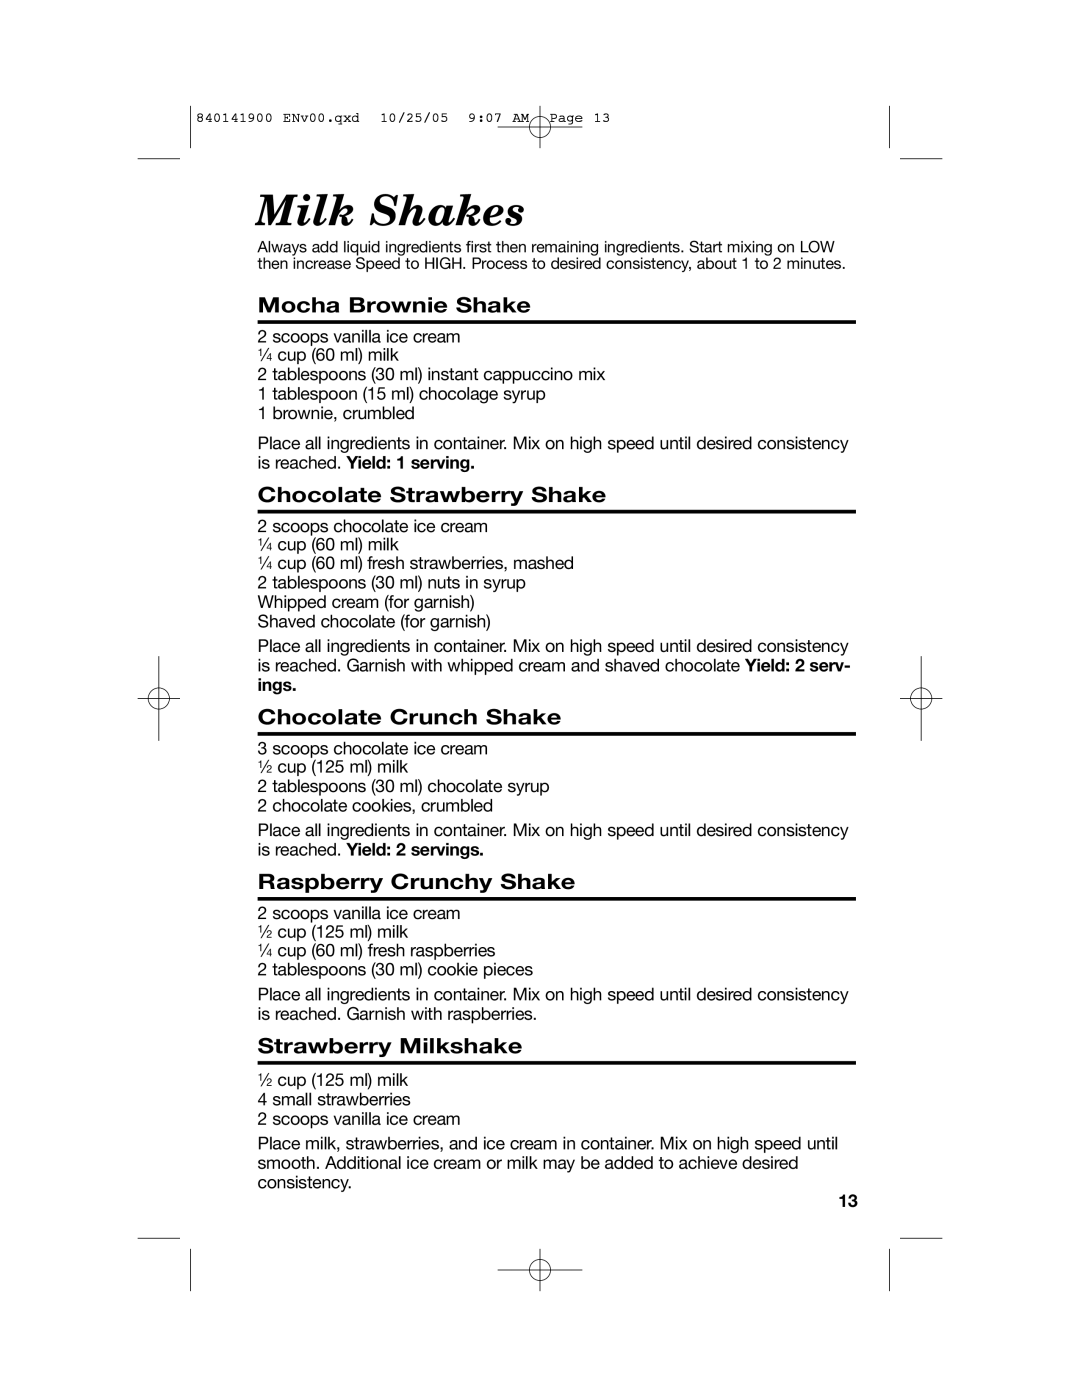 Hamilton Beach 840141900 Mocha Brownie Shake, Chocolate Strawberry Shake, Chocolate Crunch Shake, Raspberry Crunchy Shake 